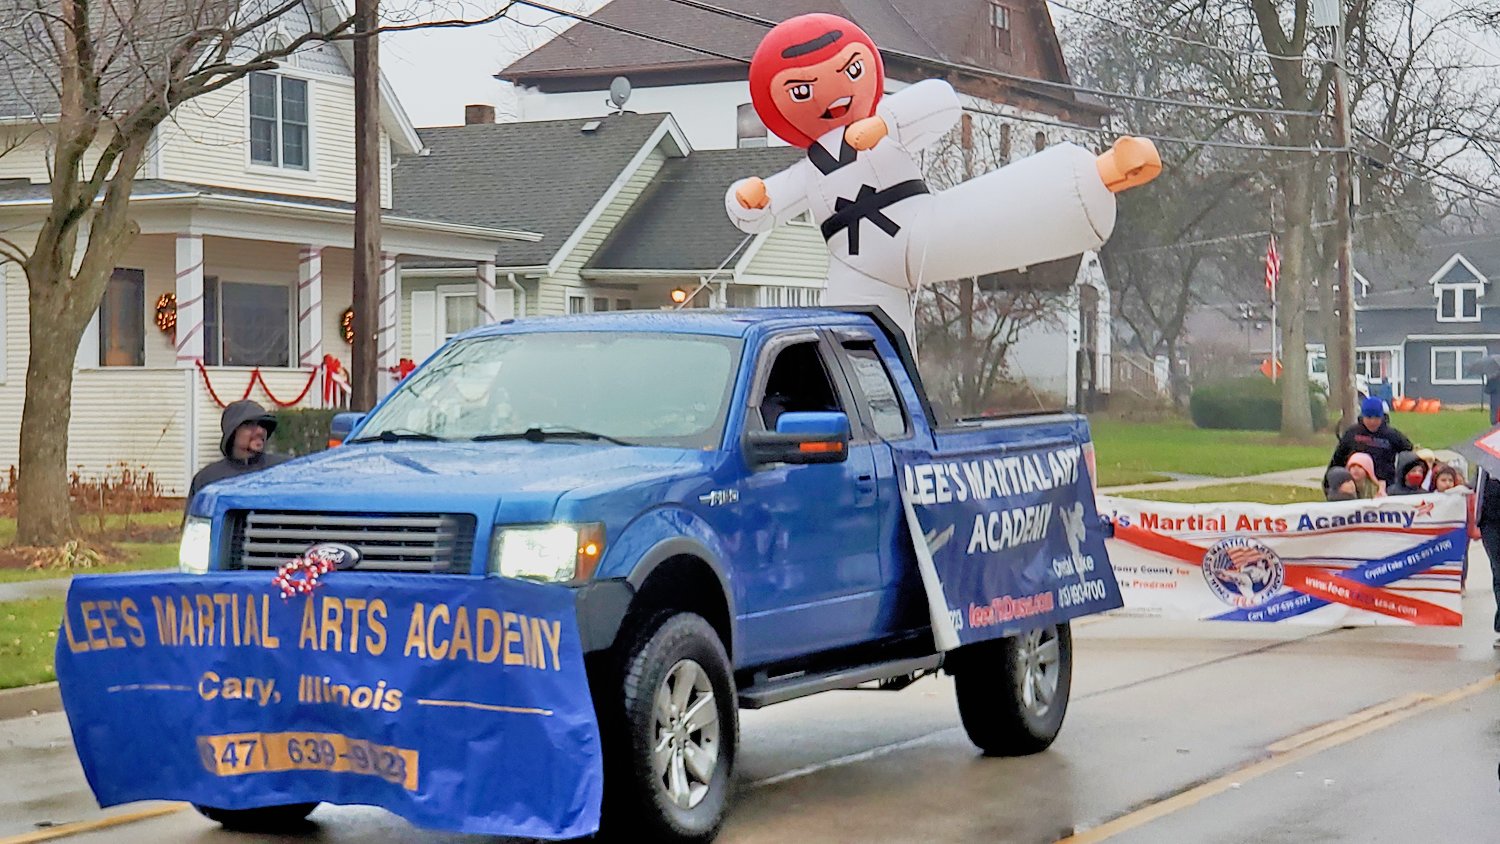 Lee's Martial Arts Academy parade truck.